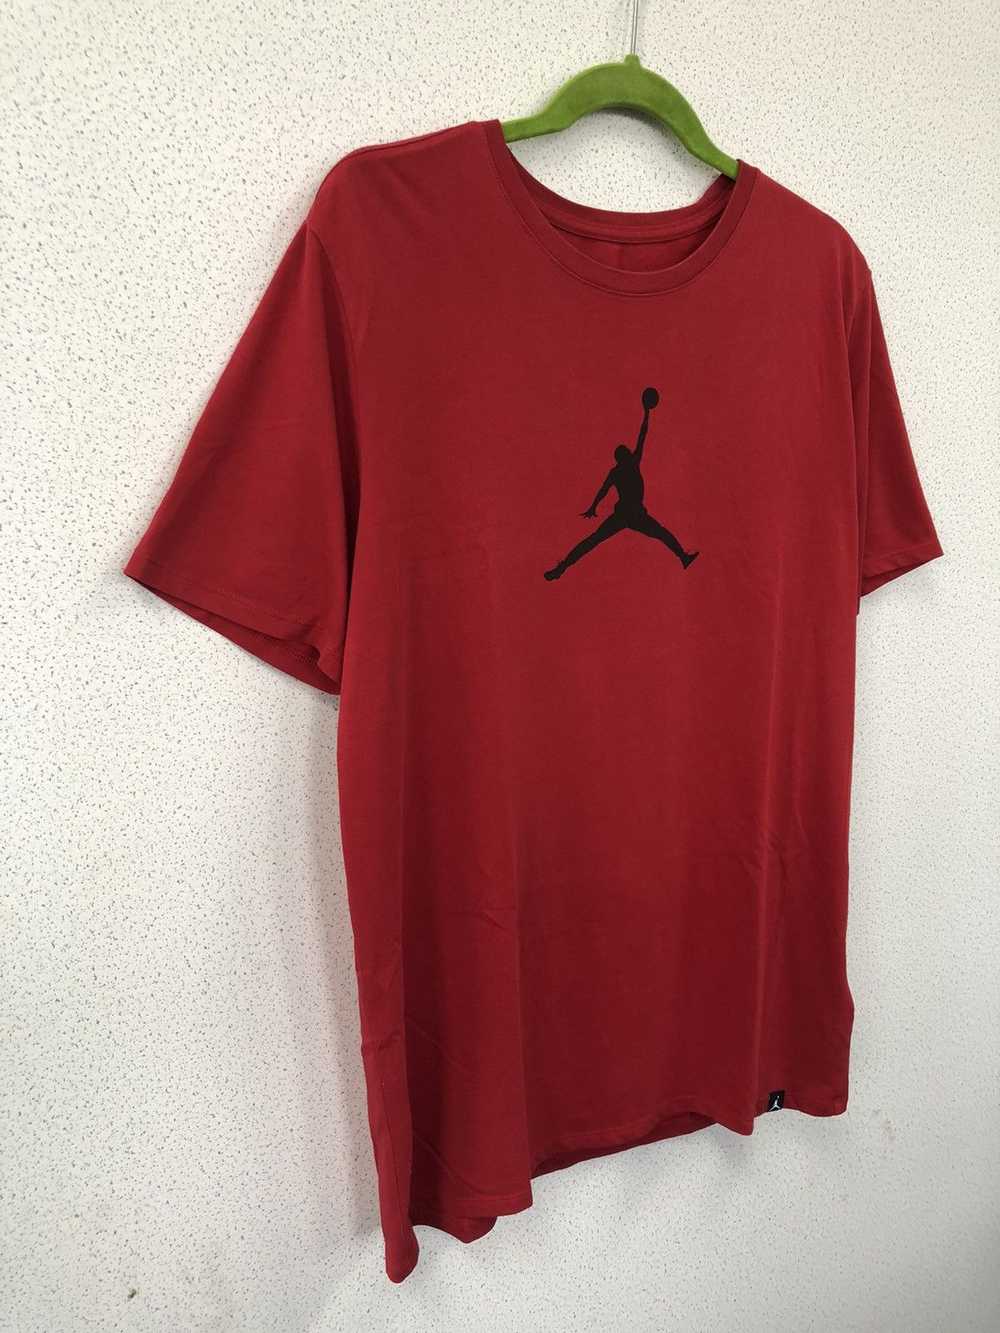 Jordan Brand × NBA × Nike Jordan Nike Red T-Shirt - image 2